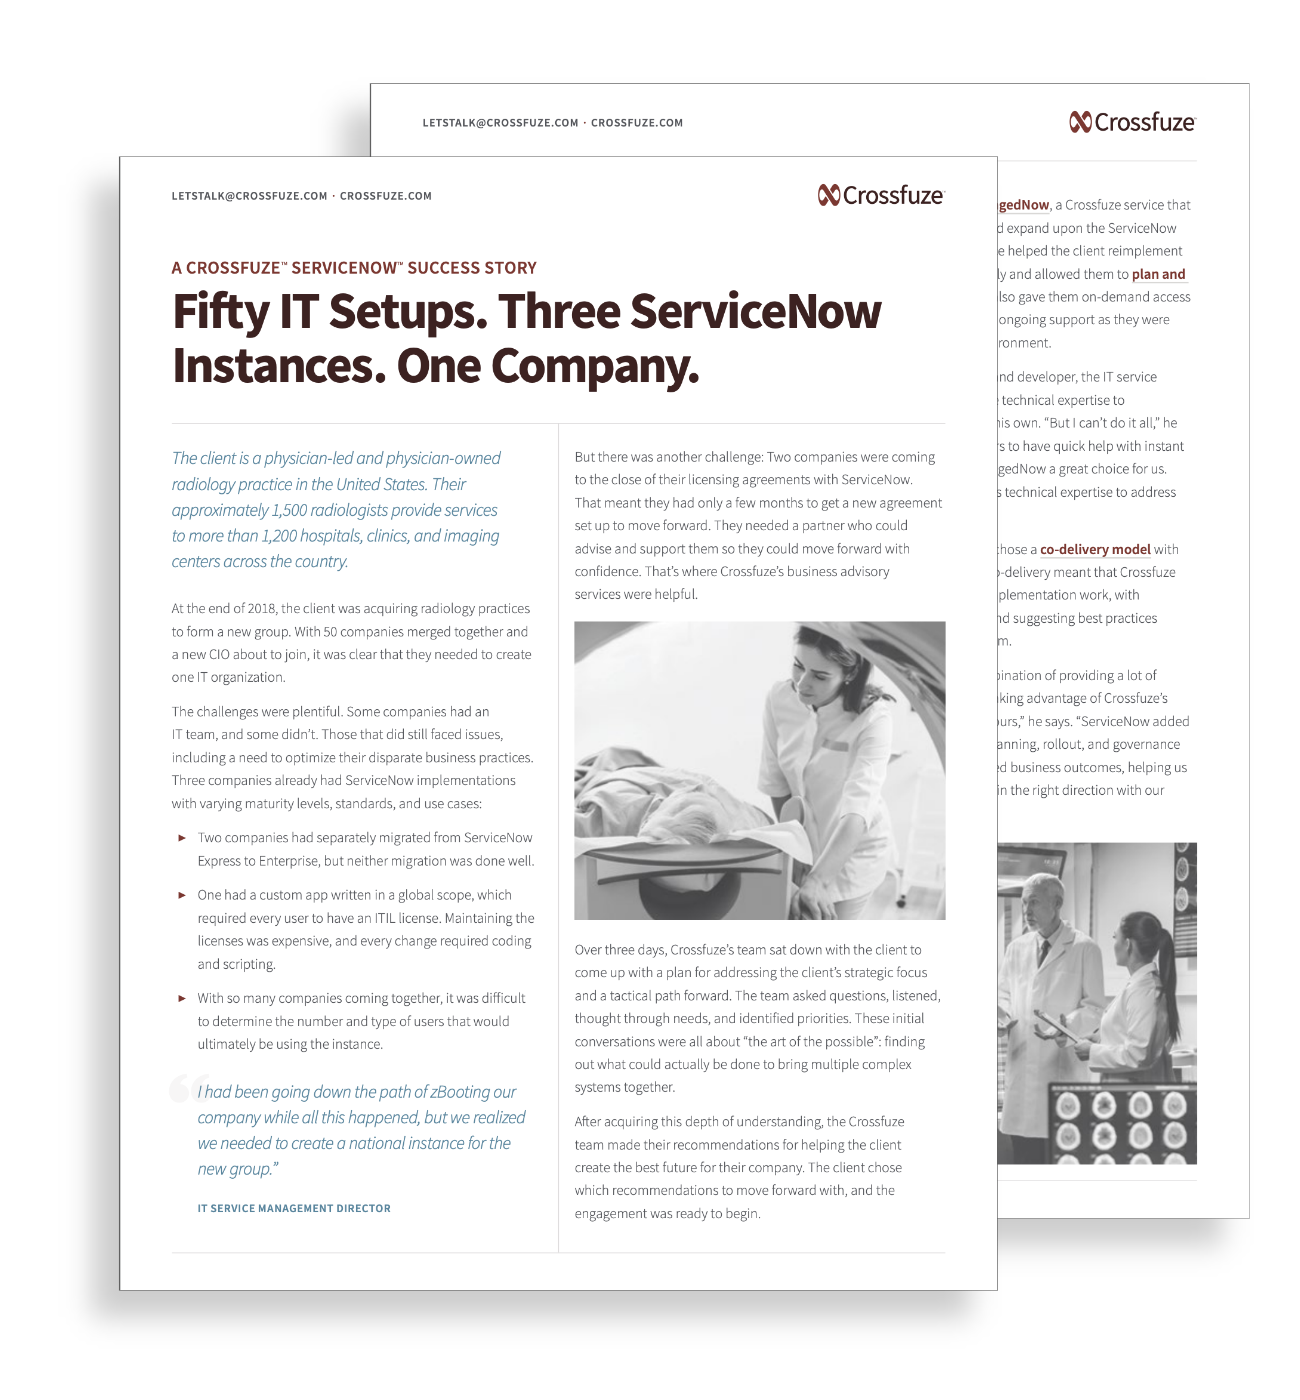 Fifty IT Setups Case Study - Crossfuze